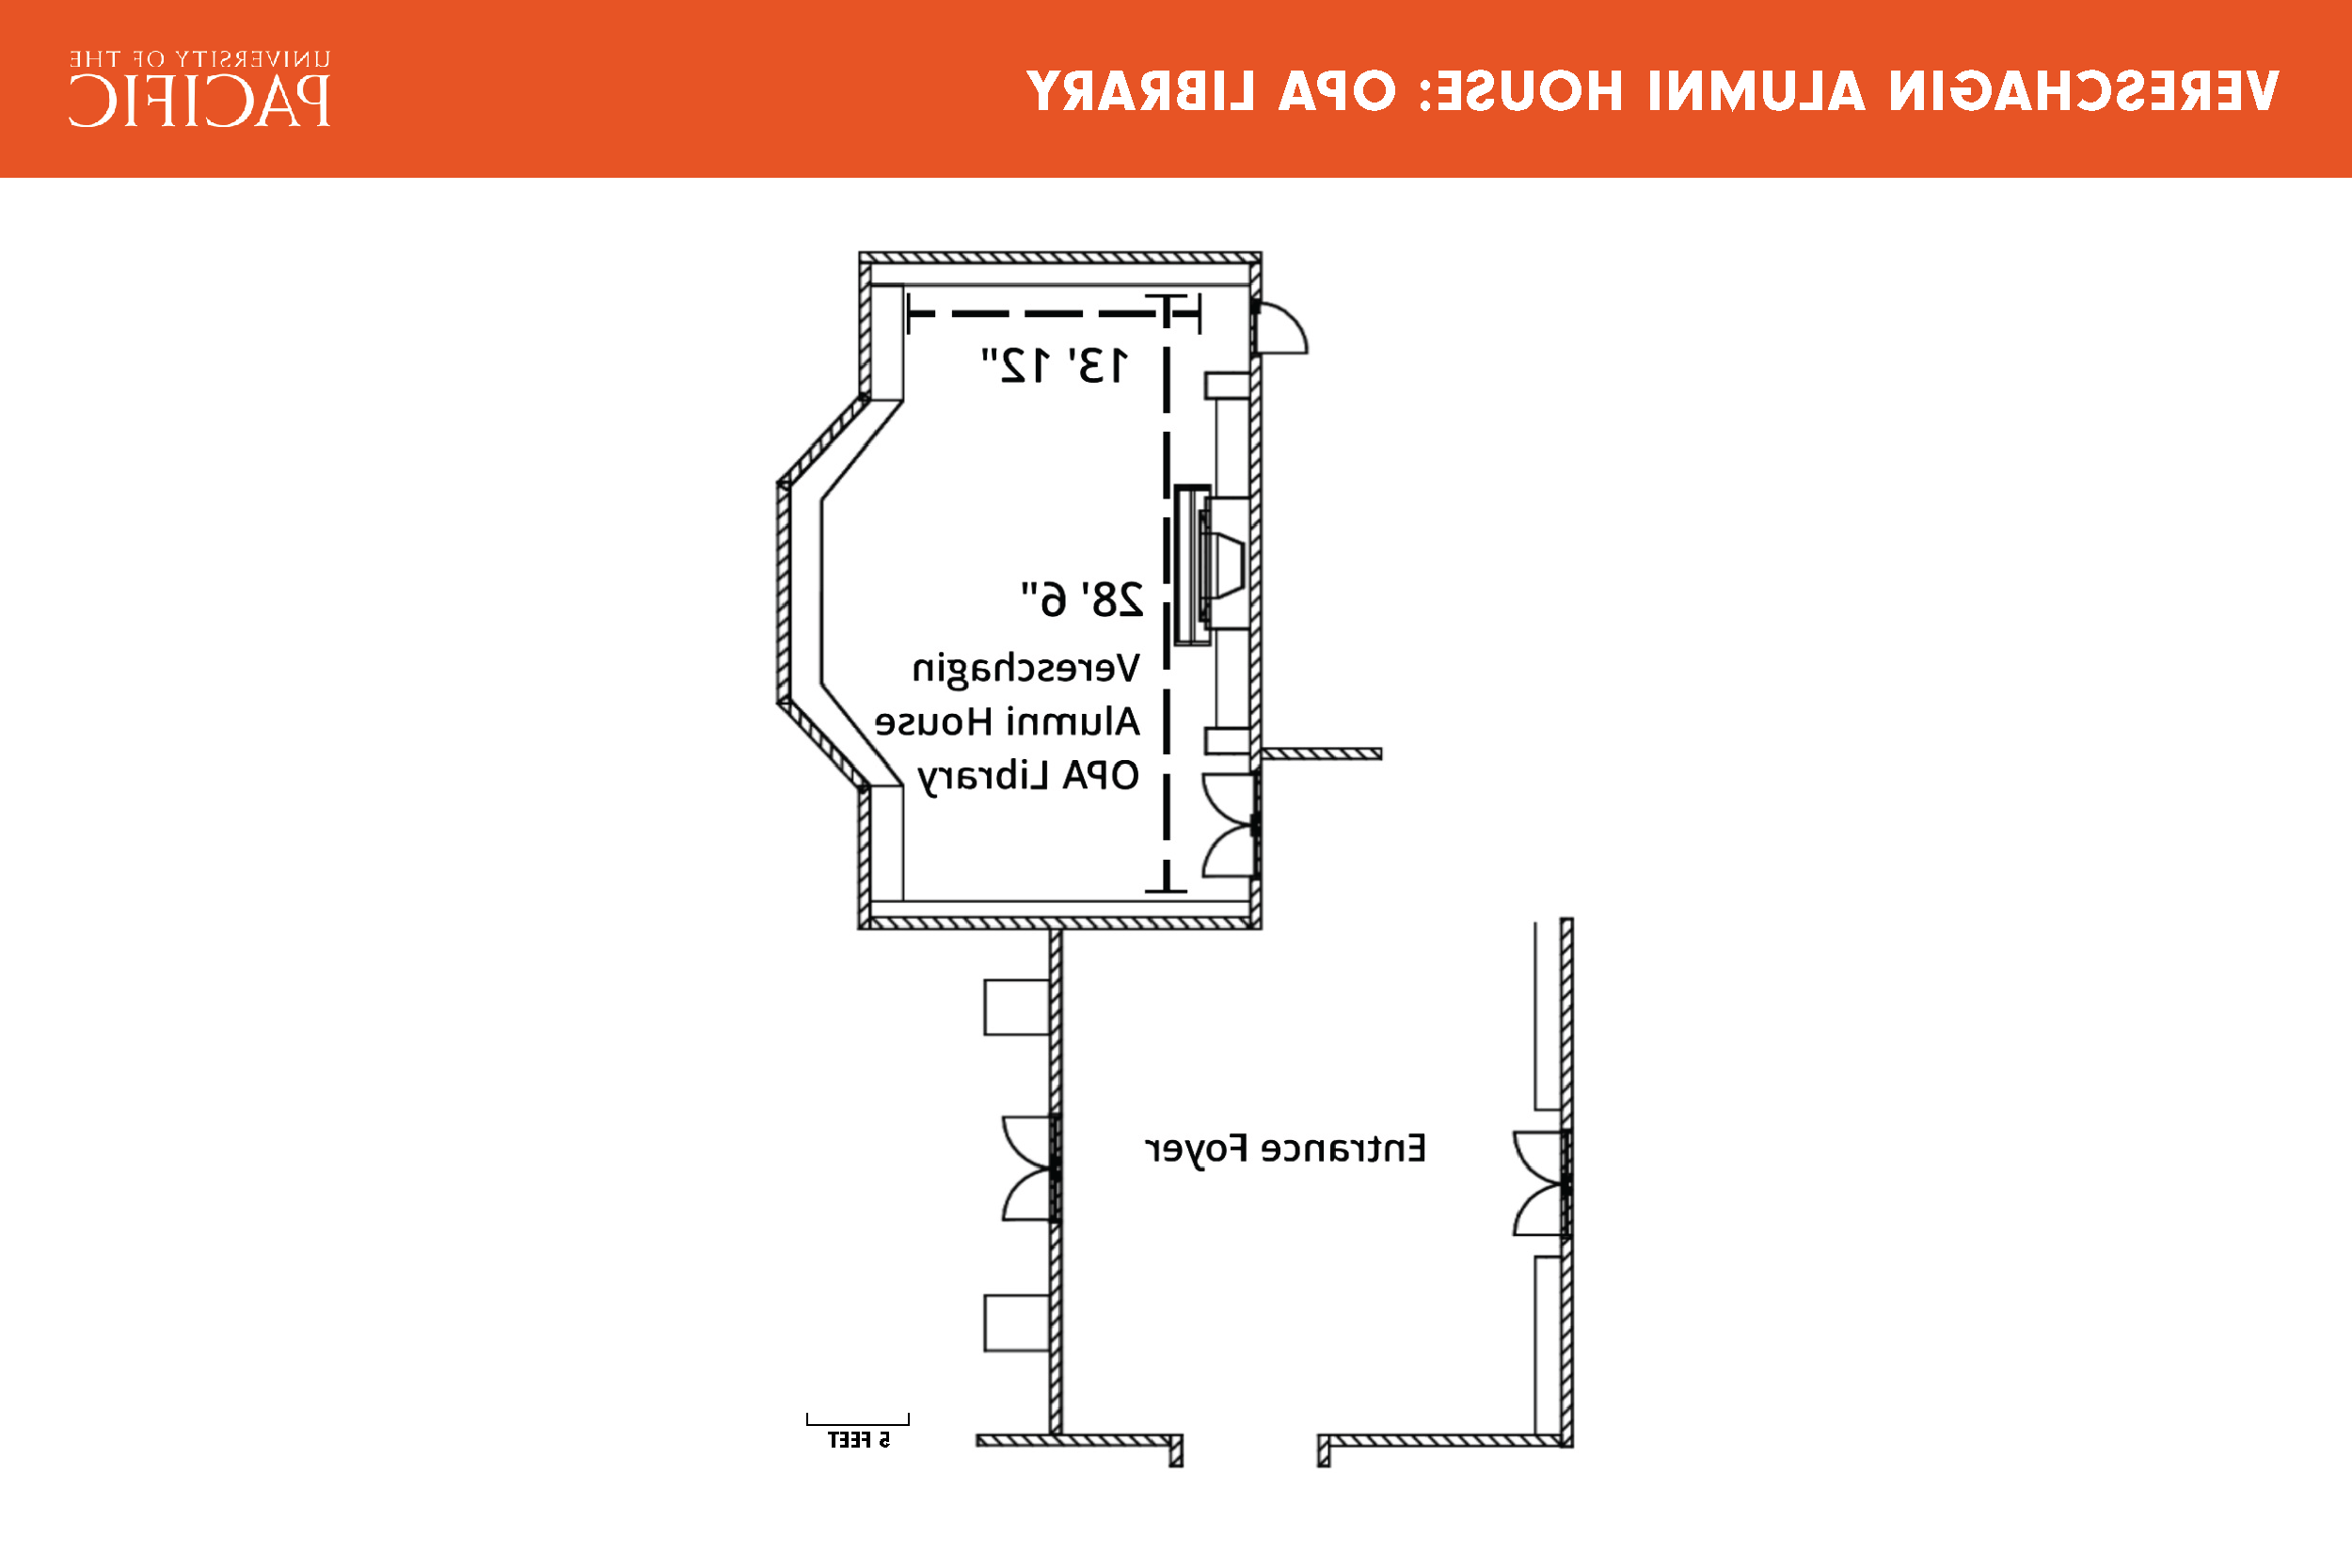 Omega Phi Alpha Library floor plan